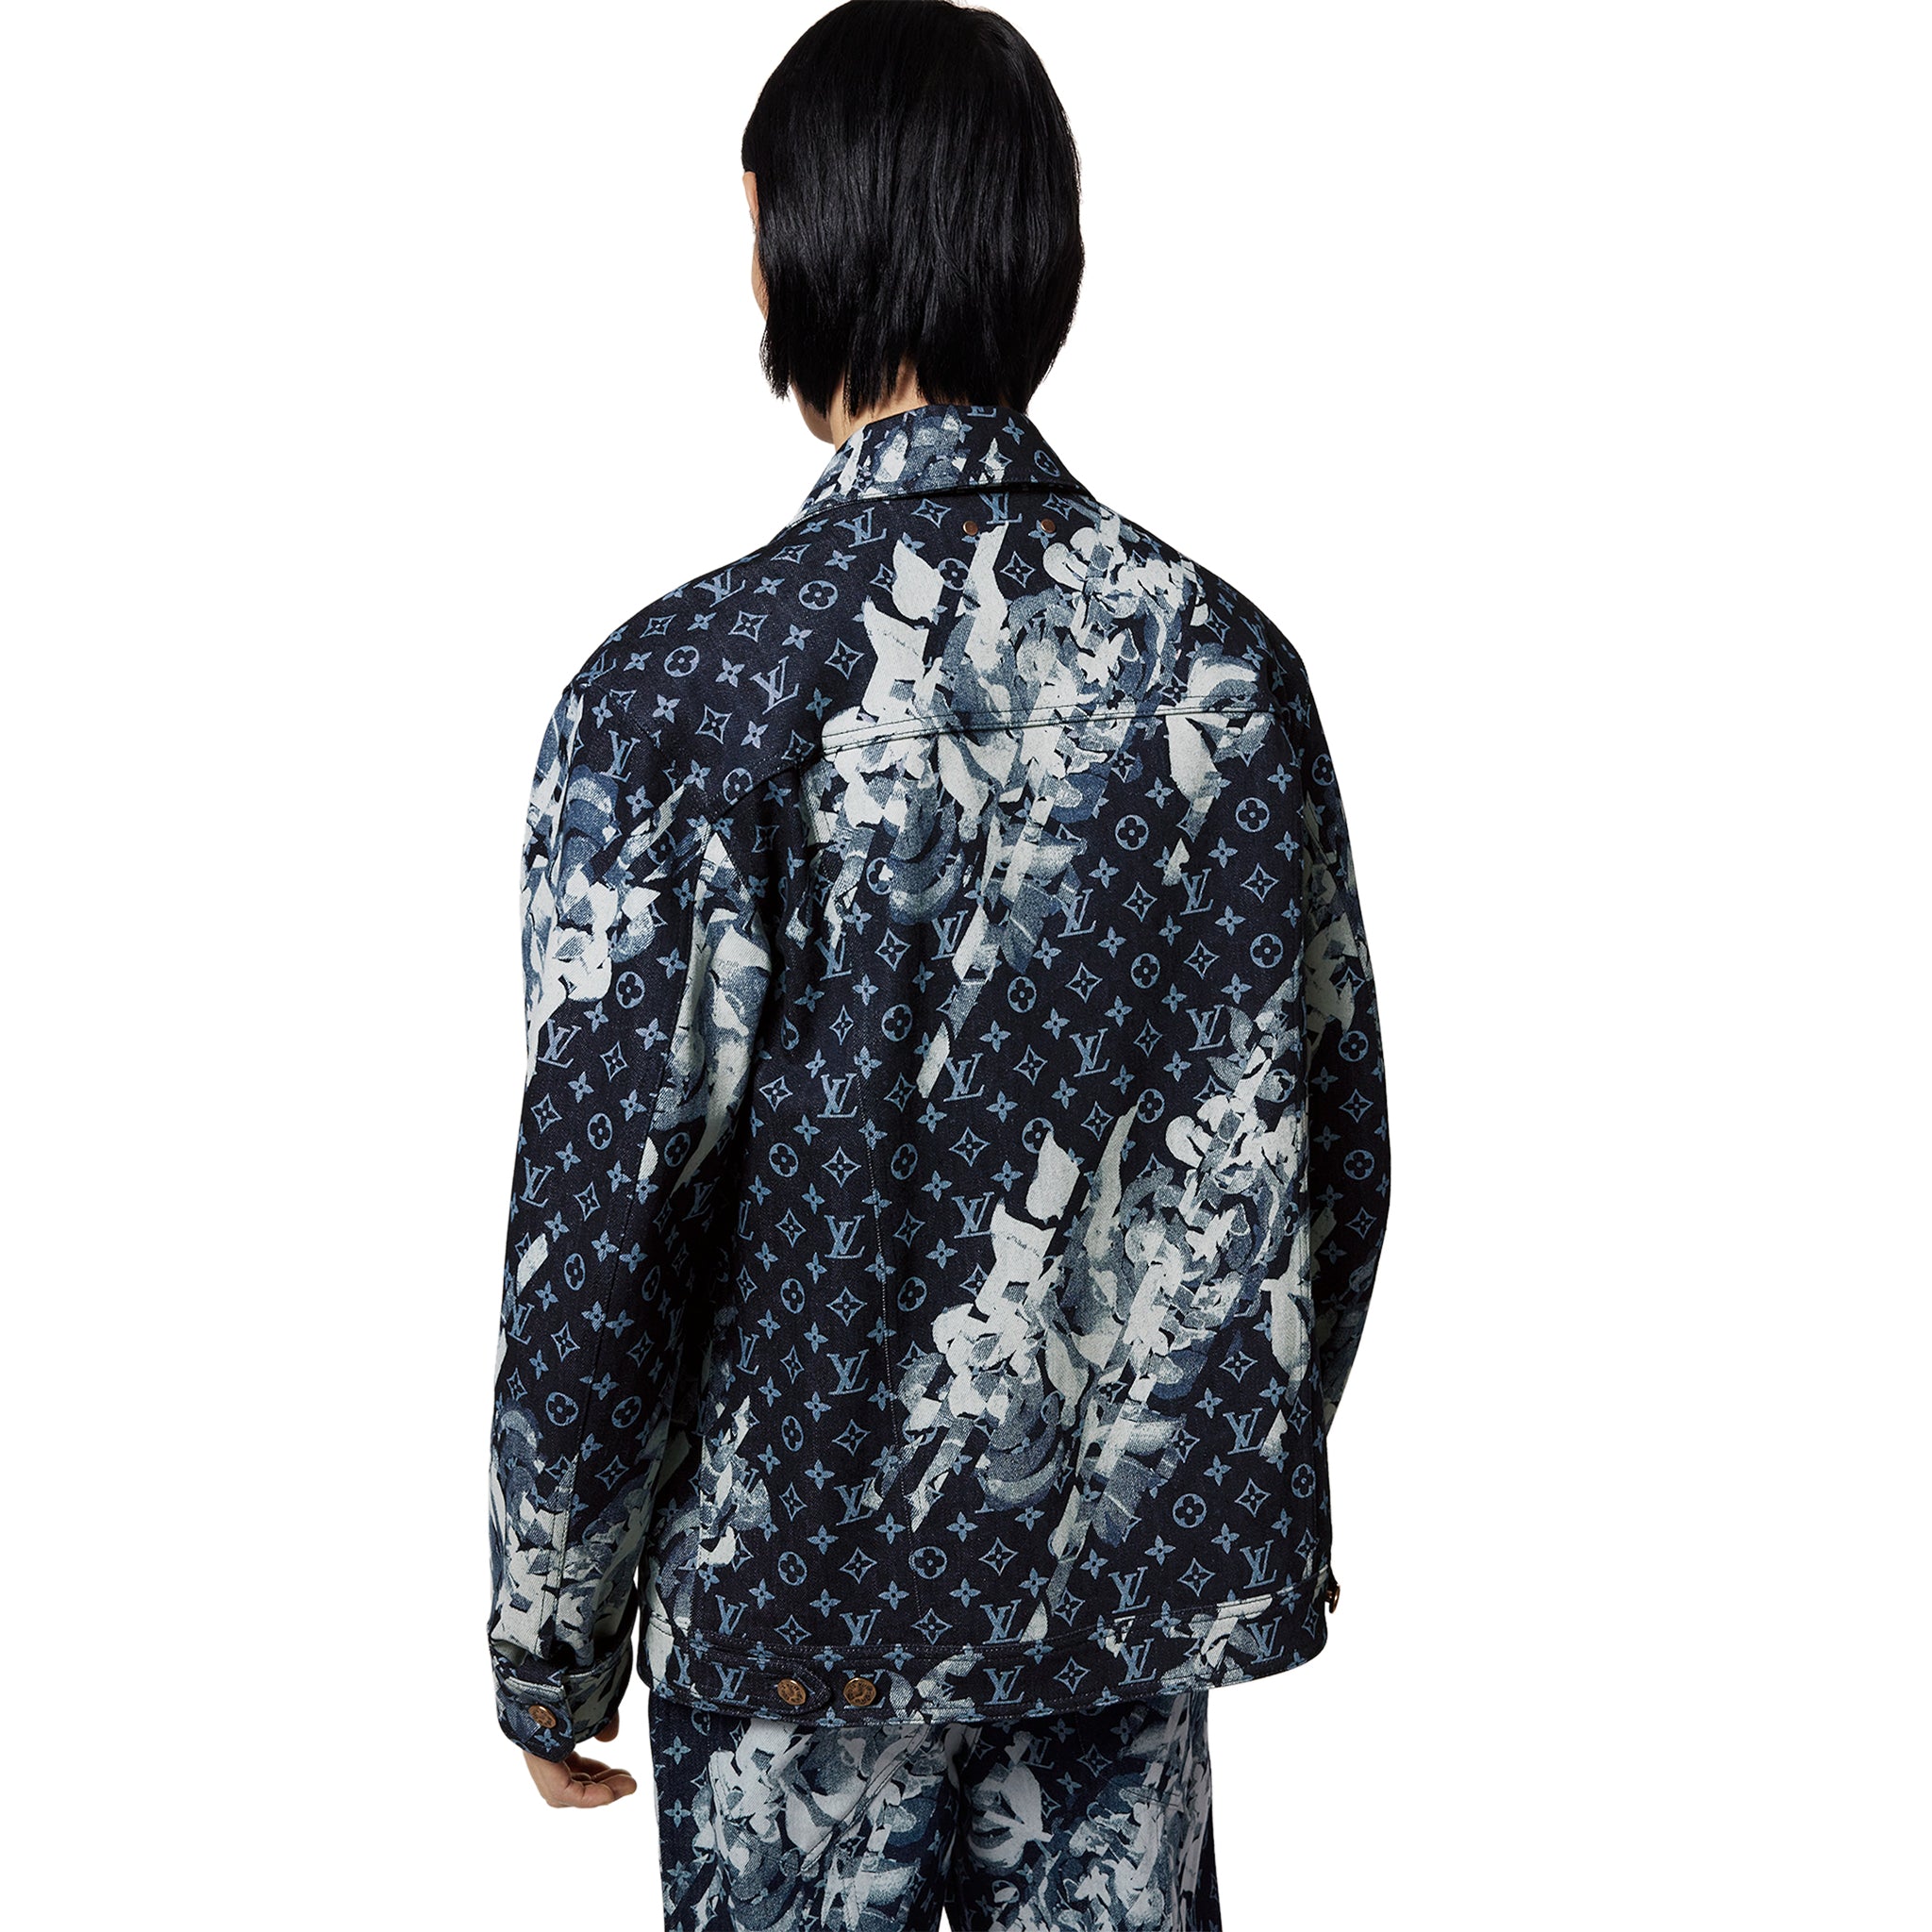 Model back view of Louis Vuitton Monogram Printed Indigo Blue Denim Jacket NVPROD4630014V